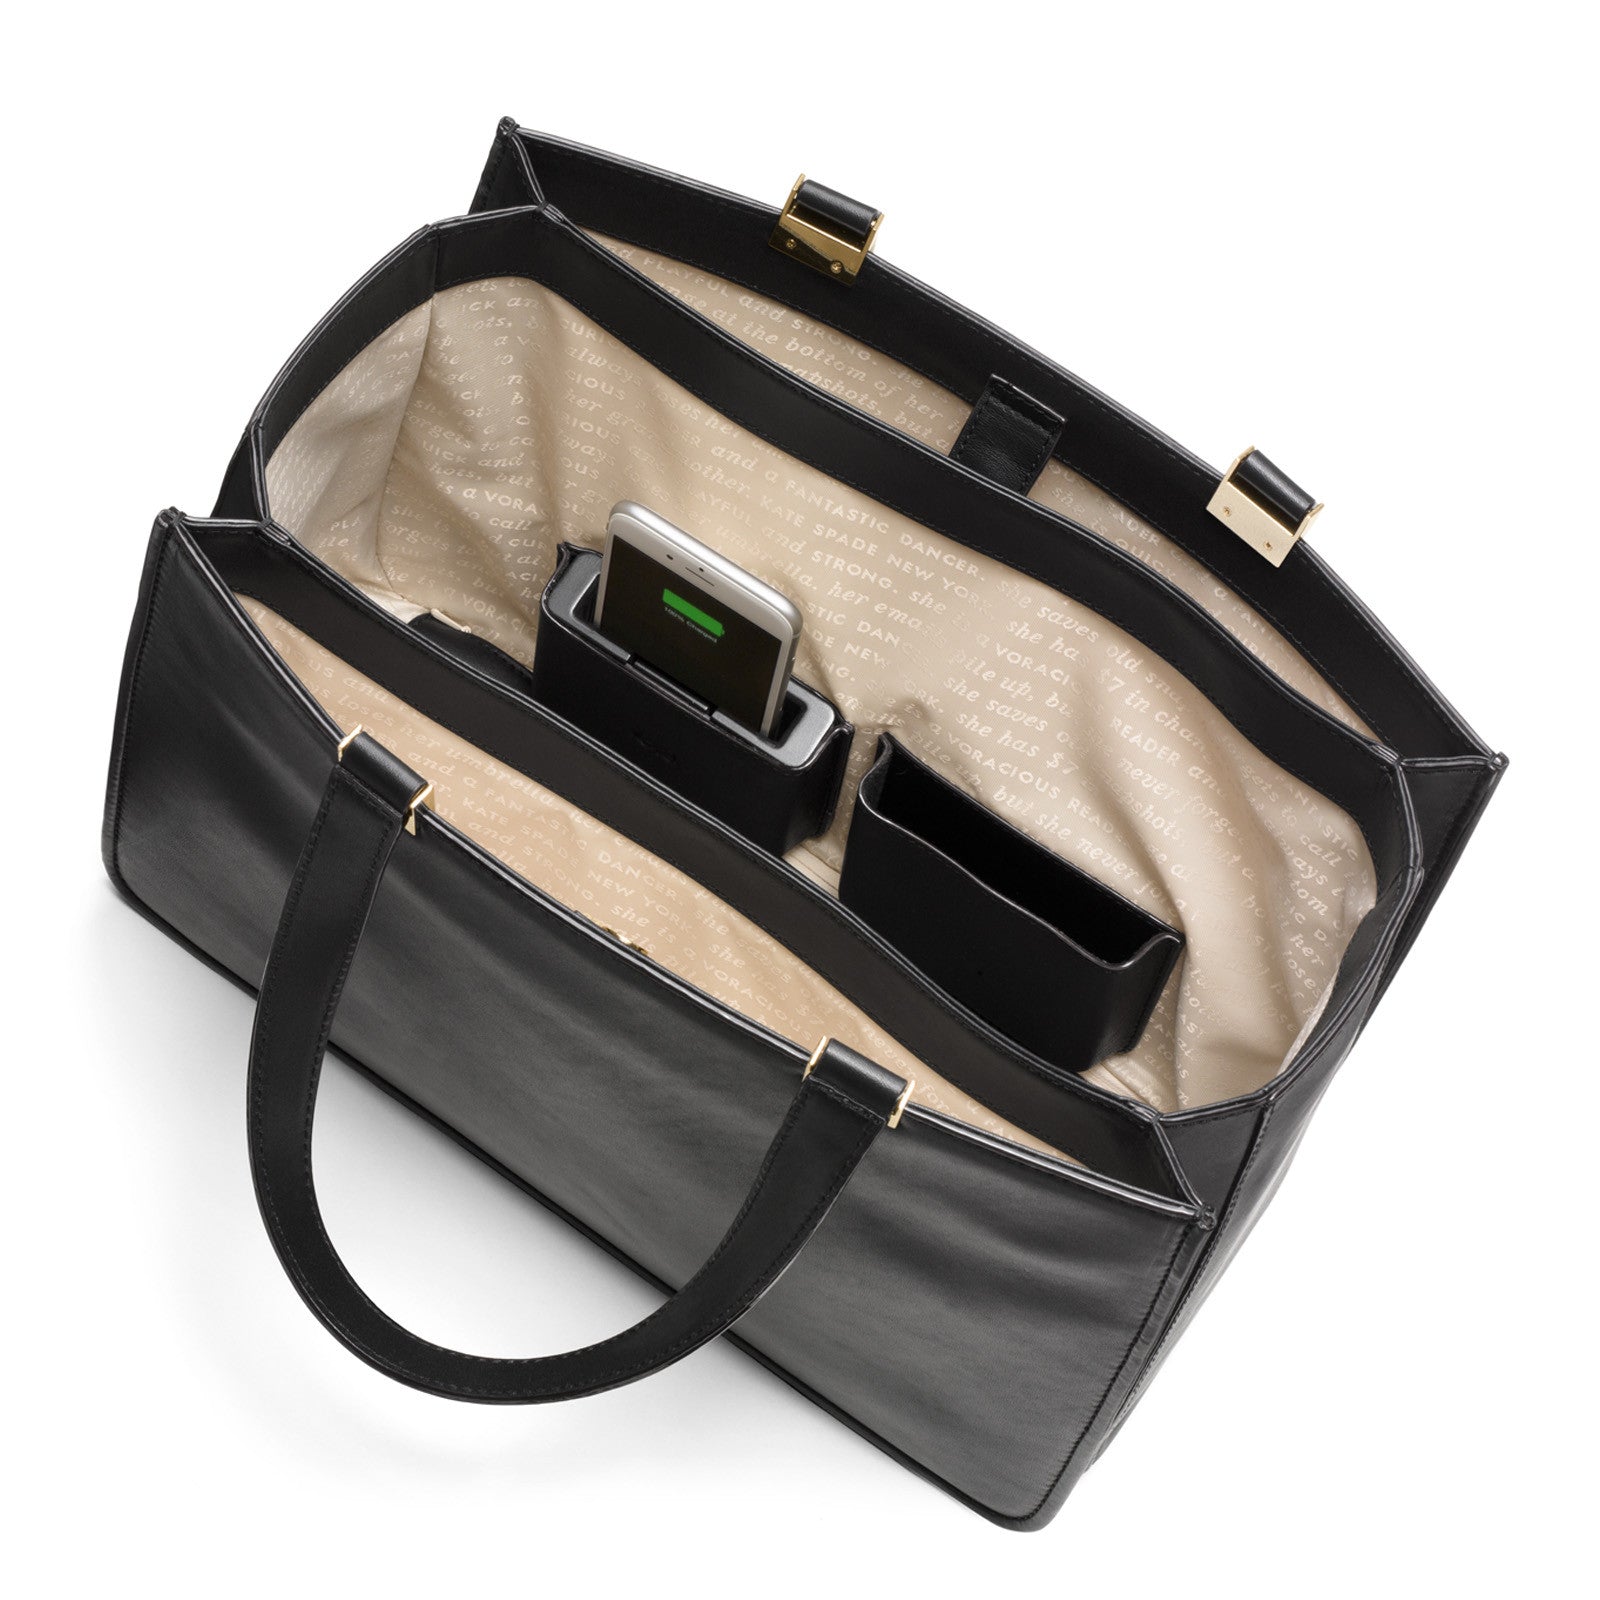 Women's kate spade new york Handbags | Nordstrom